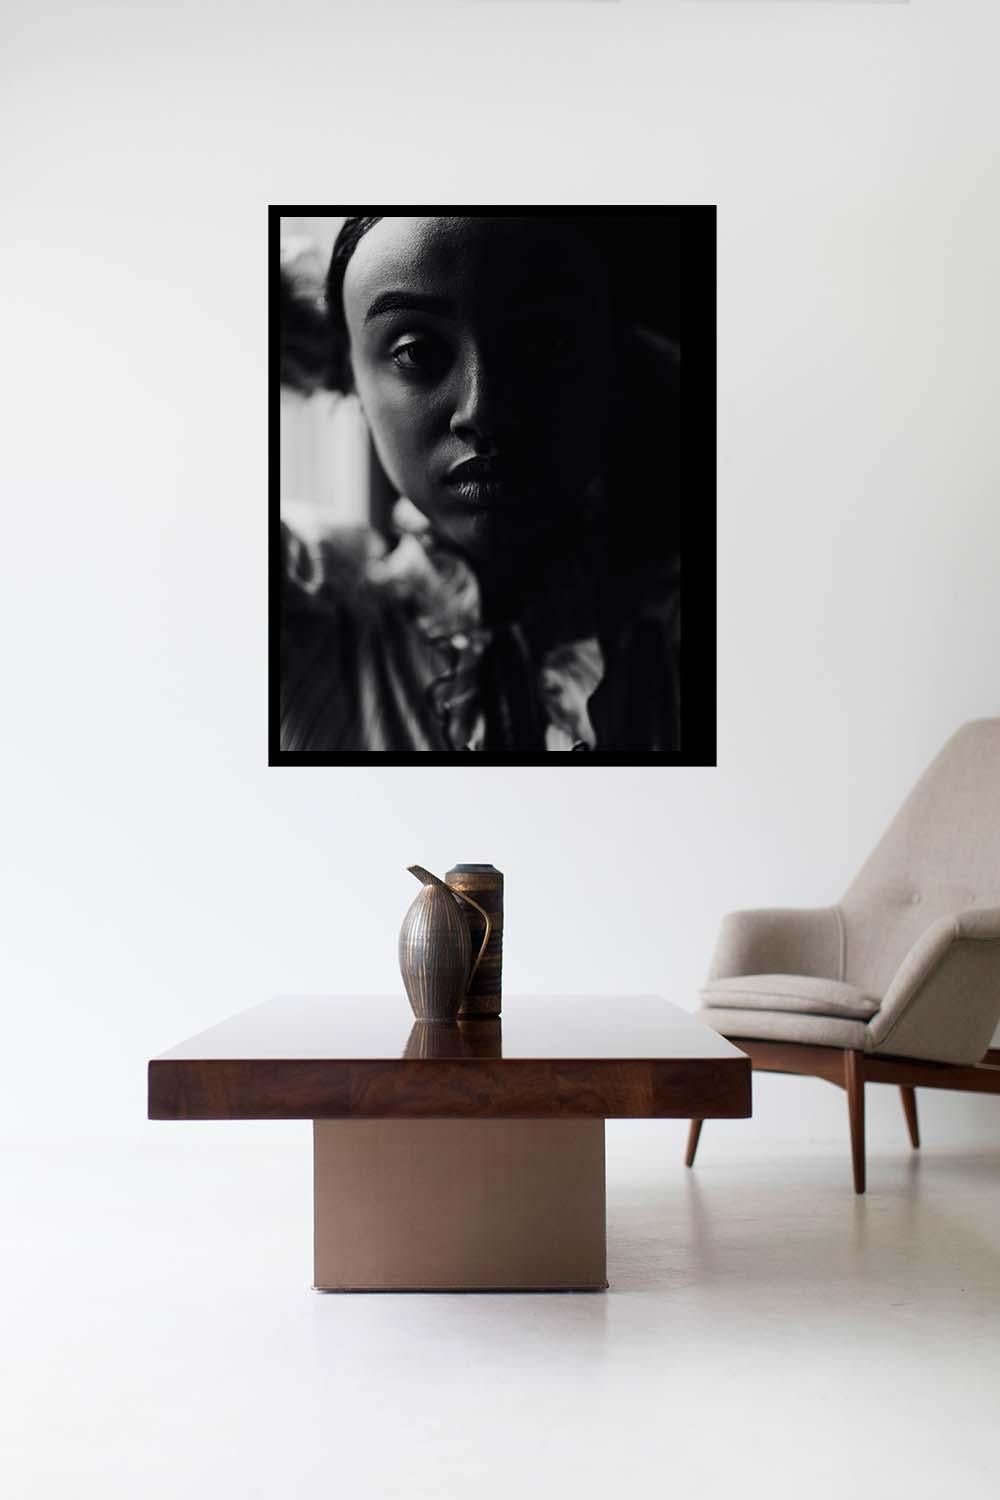 Portrait Art, Artistic Photography, Black and White Photographs-Inner Strength - Print by Addison Jones